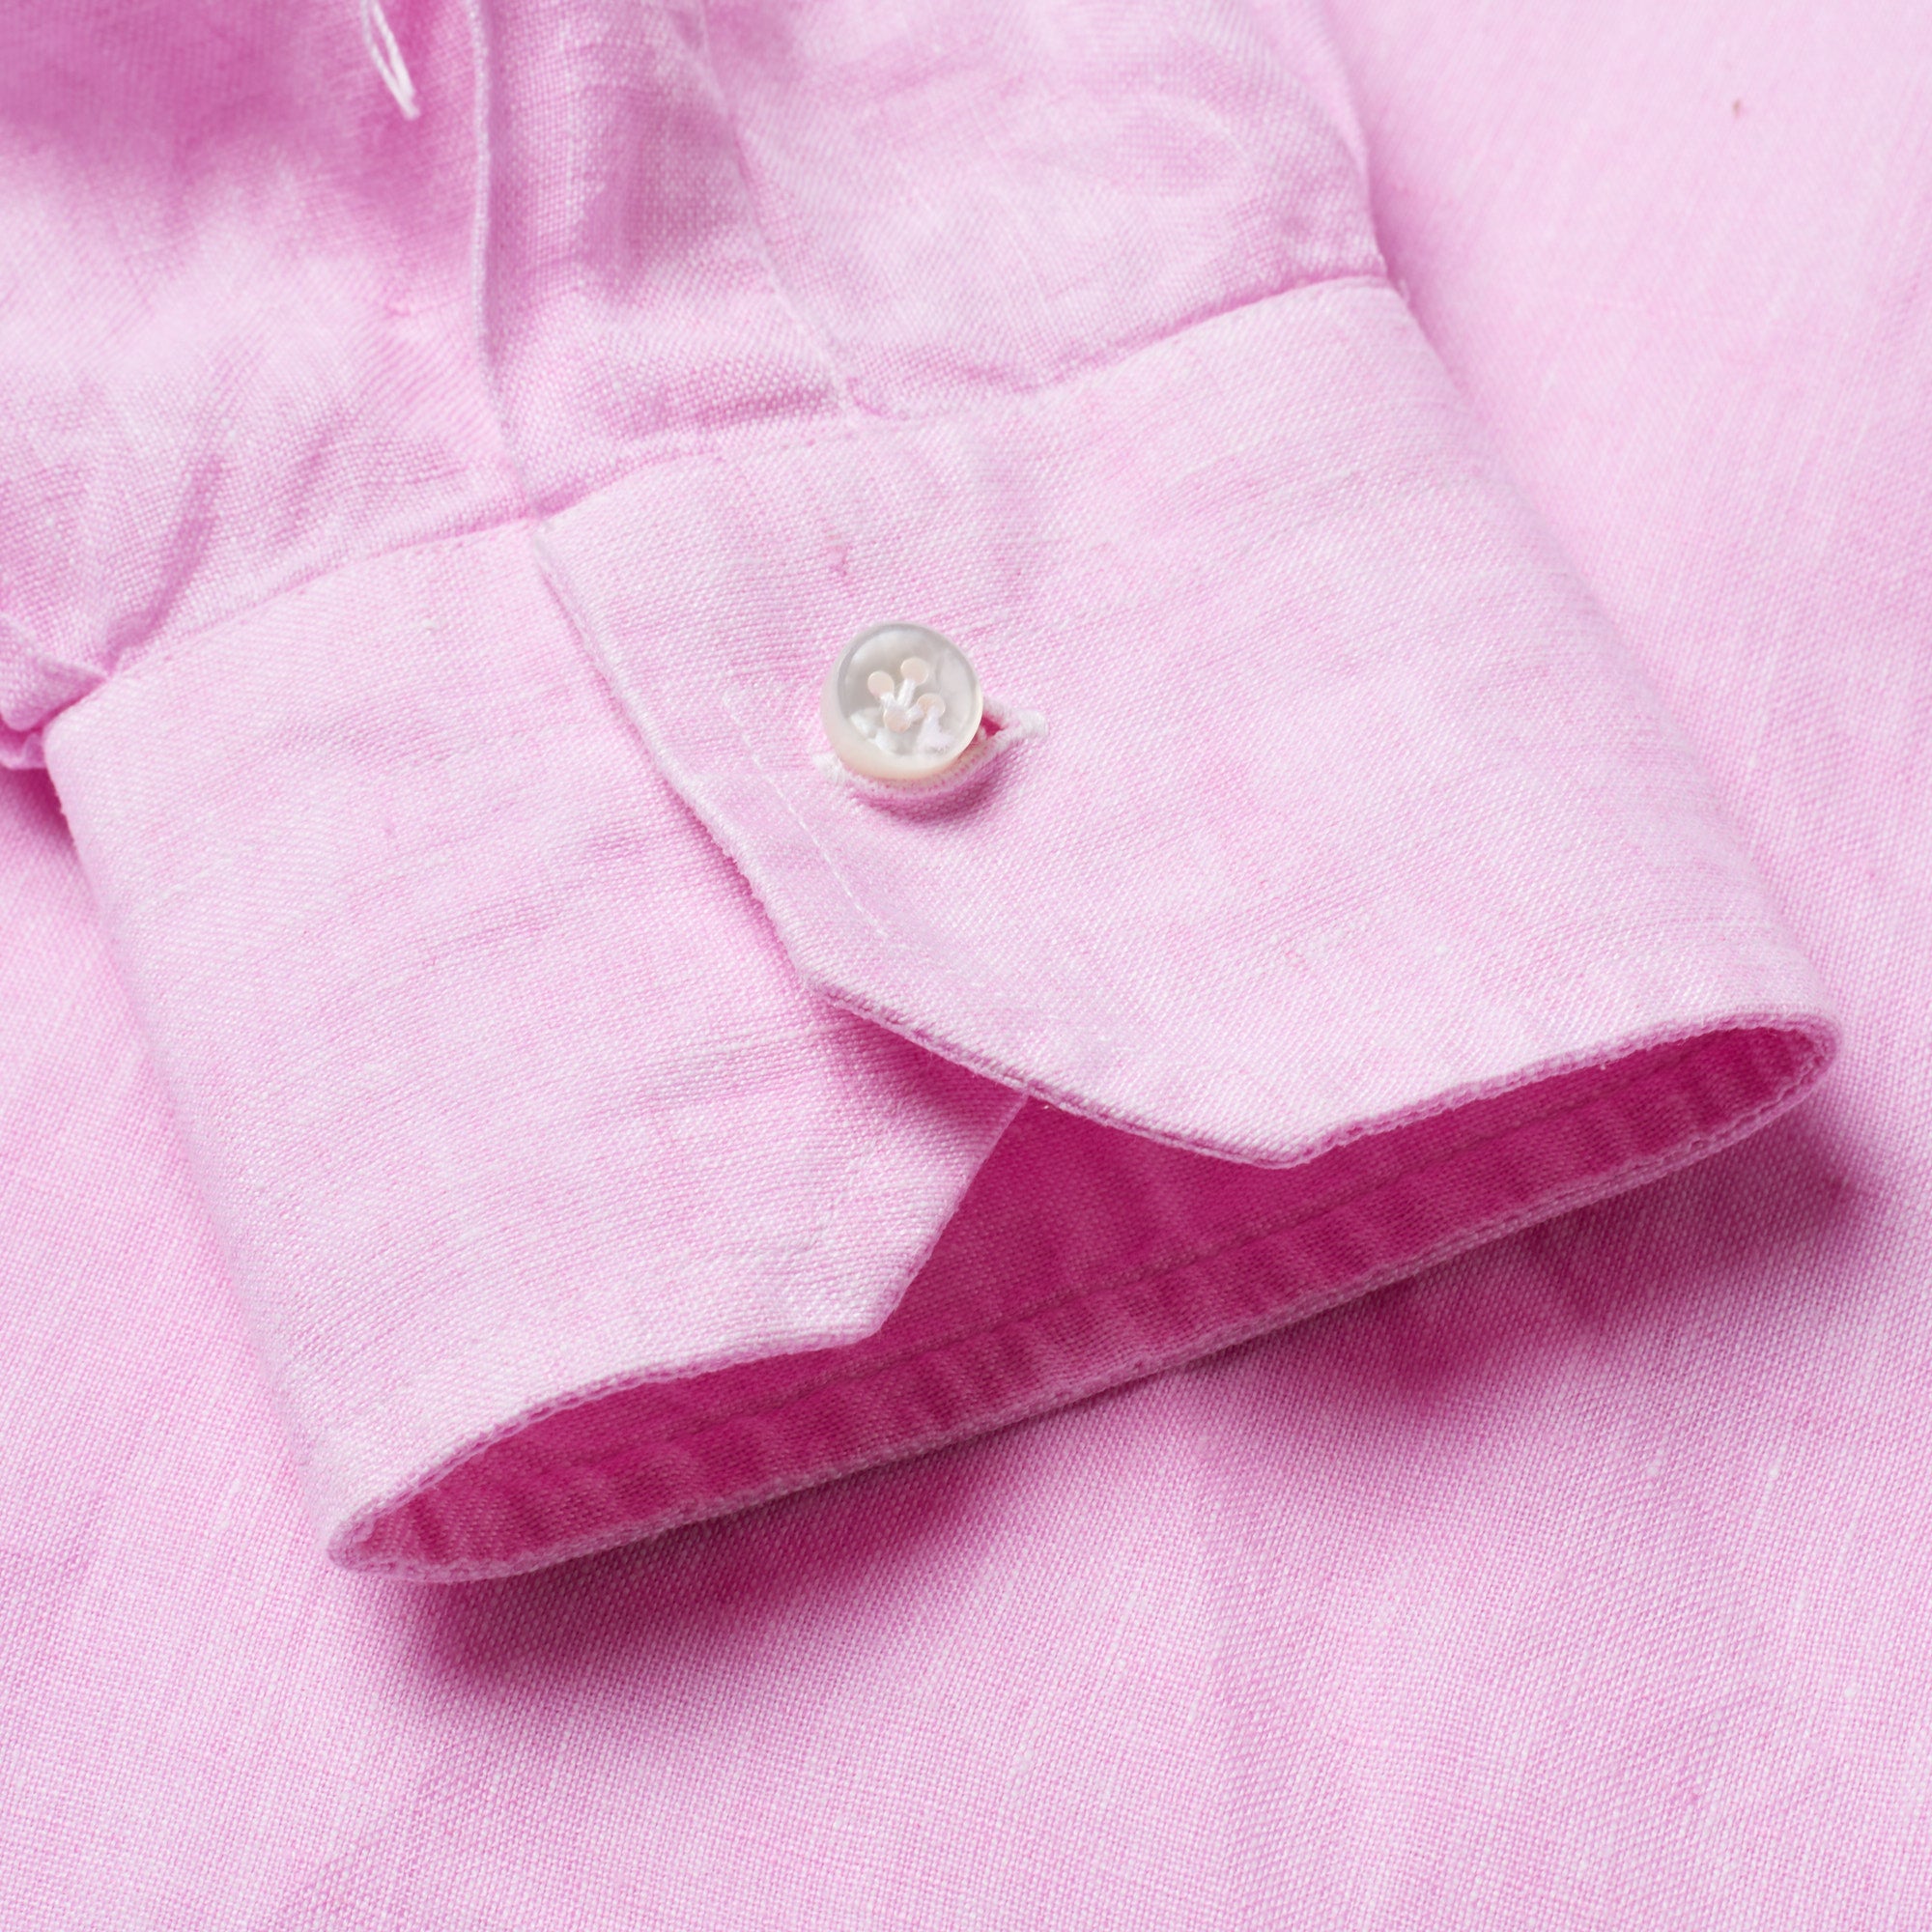 BARBA Handmade Chambray Pink Linen Button-Down Shirt EU 40 US 15.75 BARBA